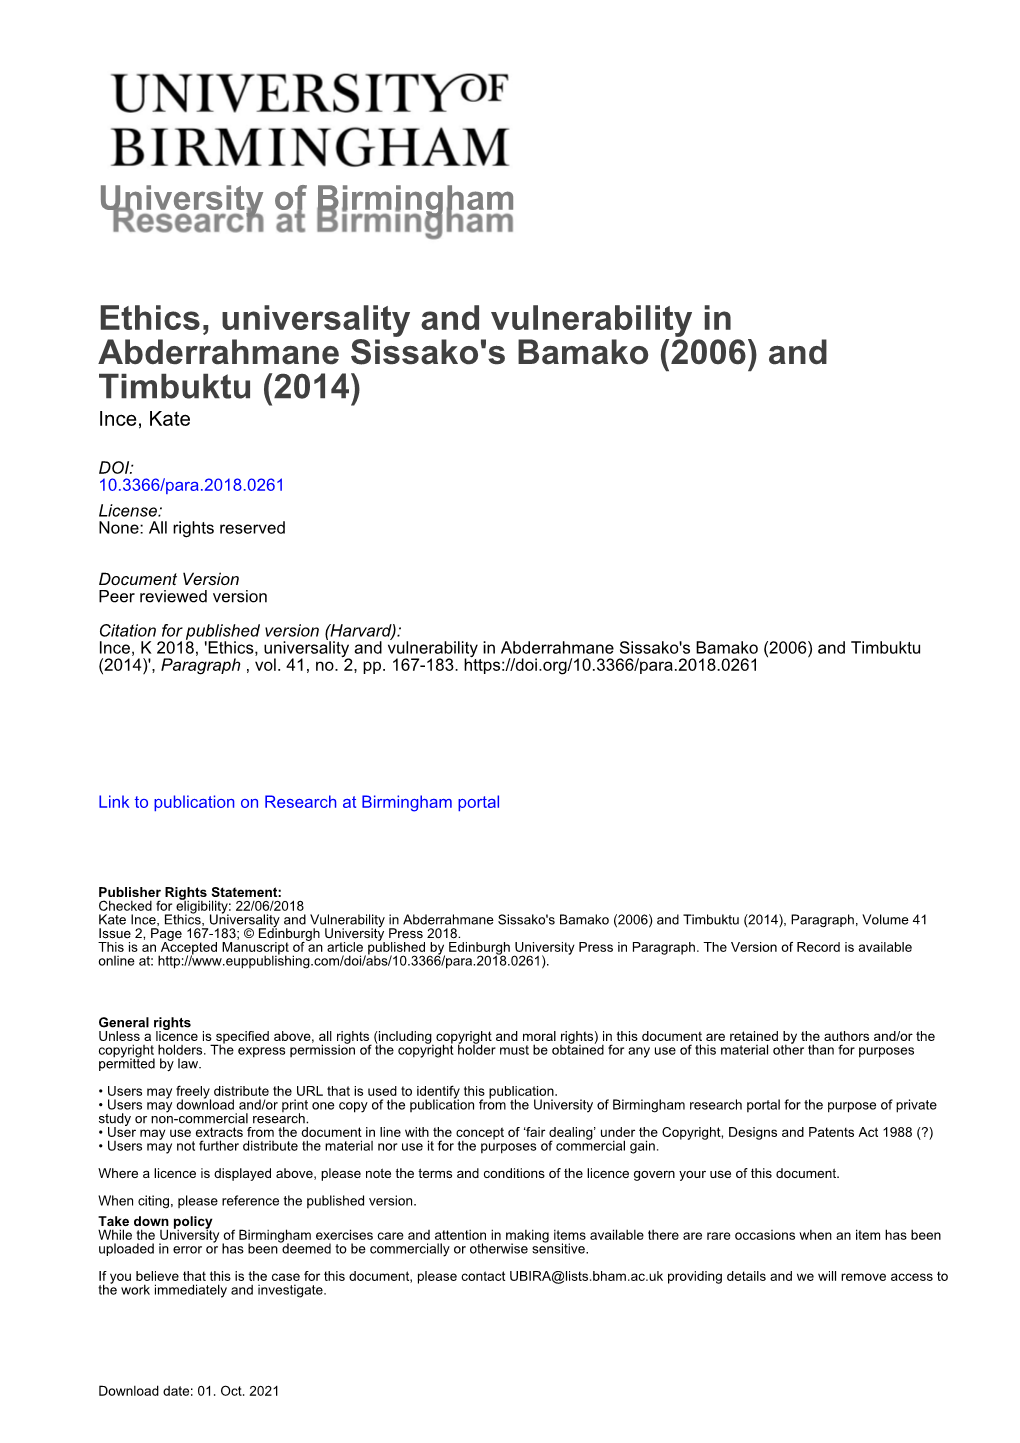 University of Birmingham Ethics, Universality And